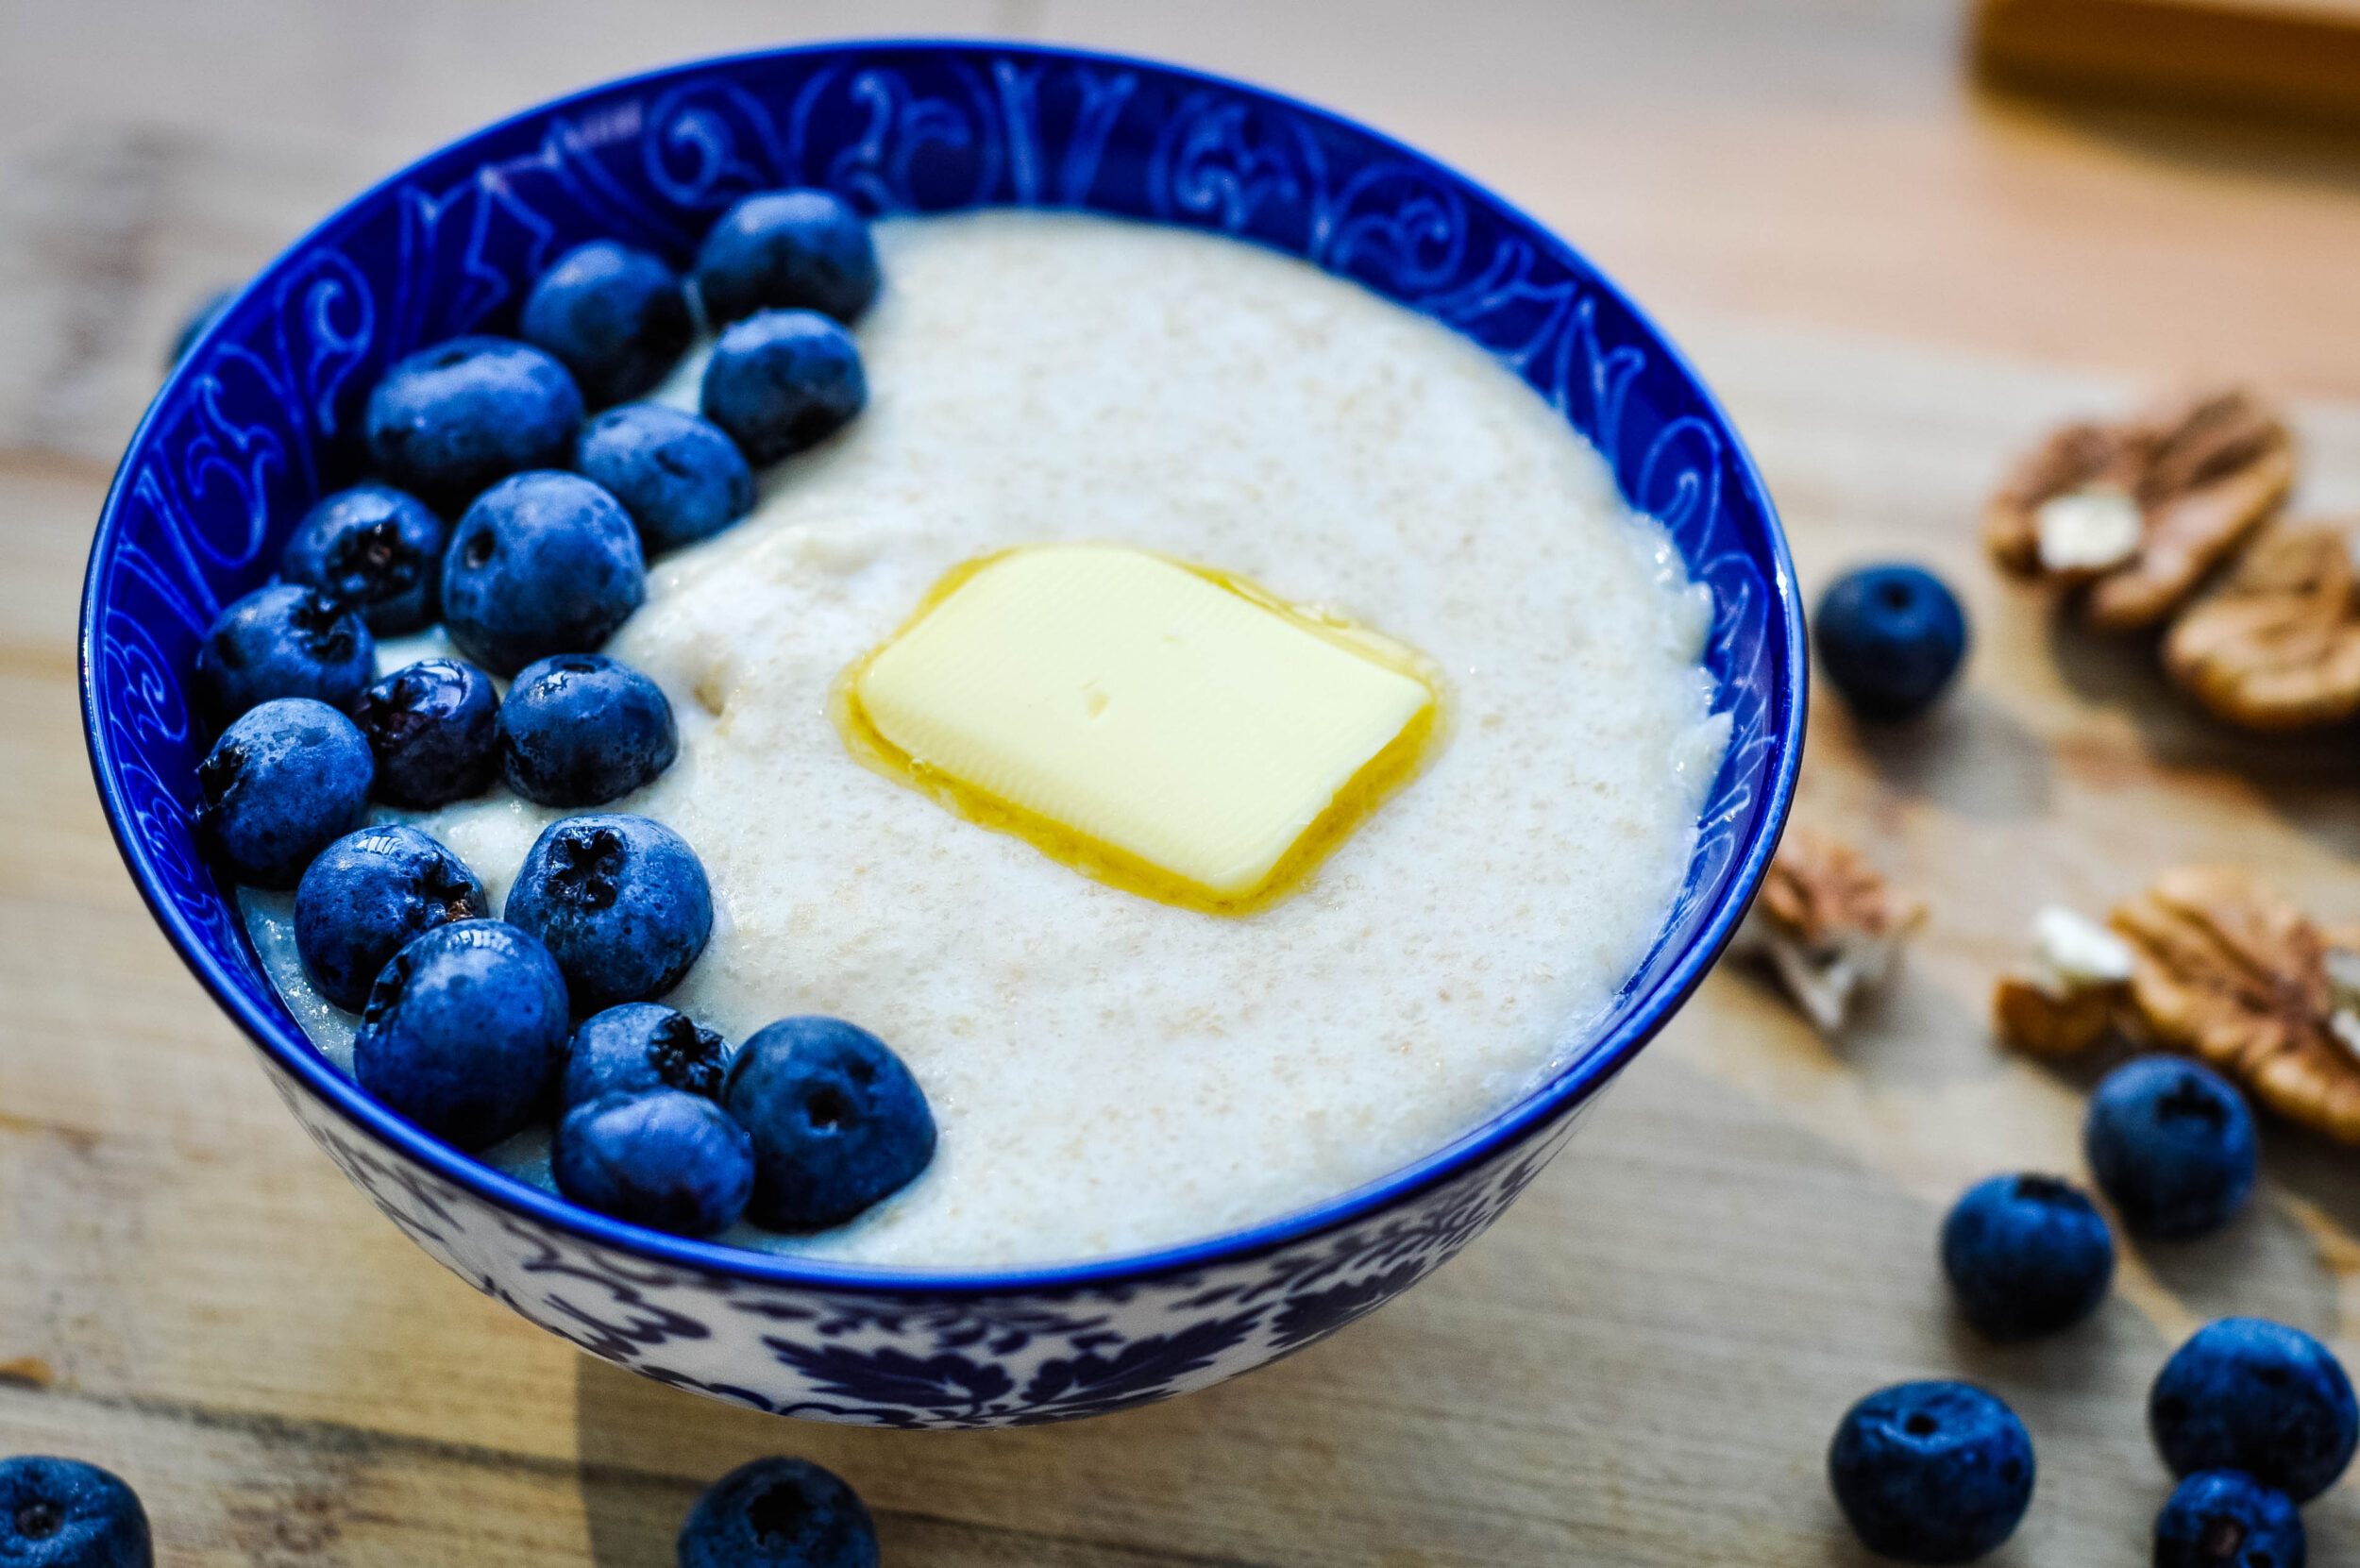 An eggless breakfast idea of cream of wheat porridge.